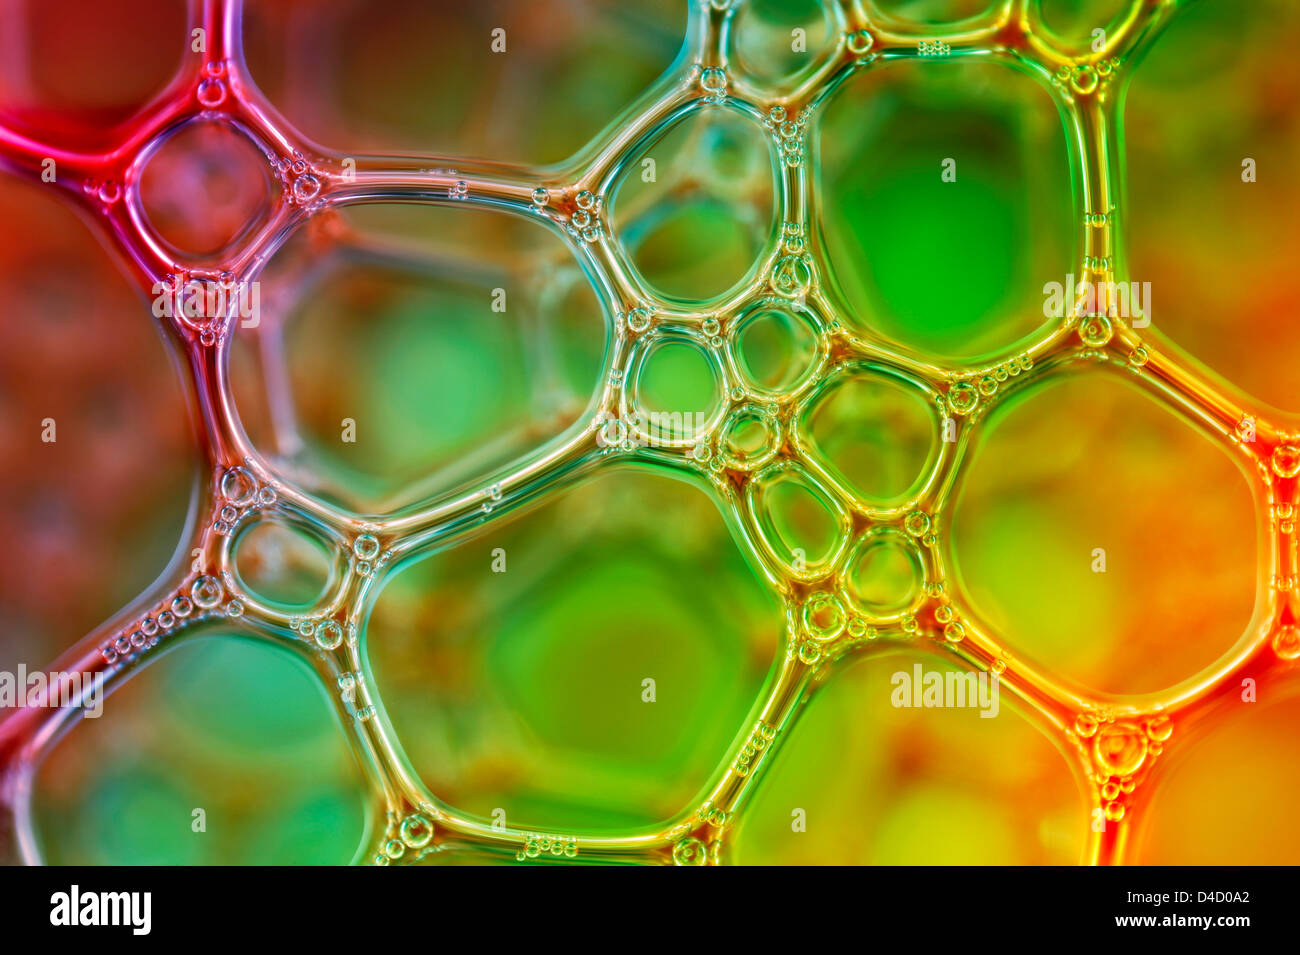 Soap bubbles, extreme close-up Stock Photo